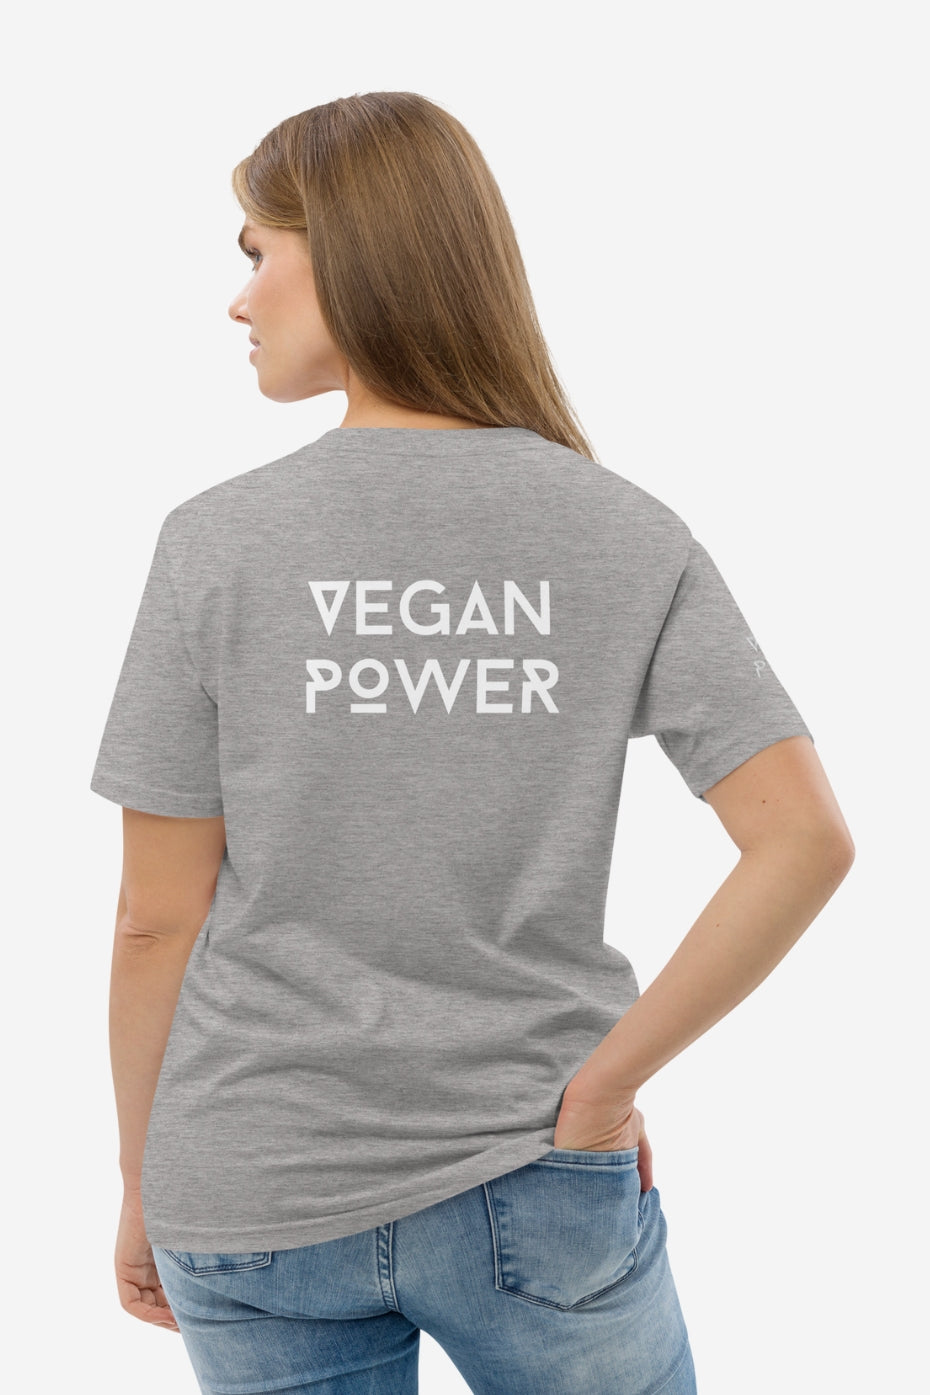 Vegan Power - Unisex Organic Cotton T-shirt